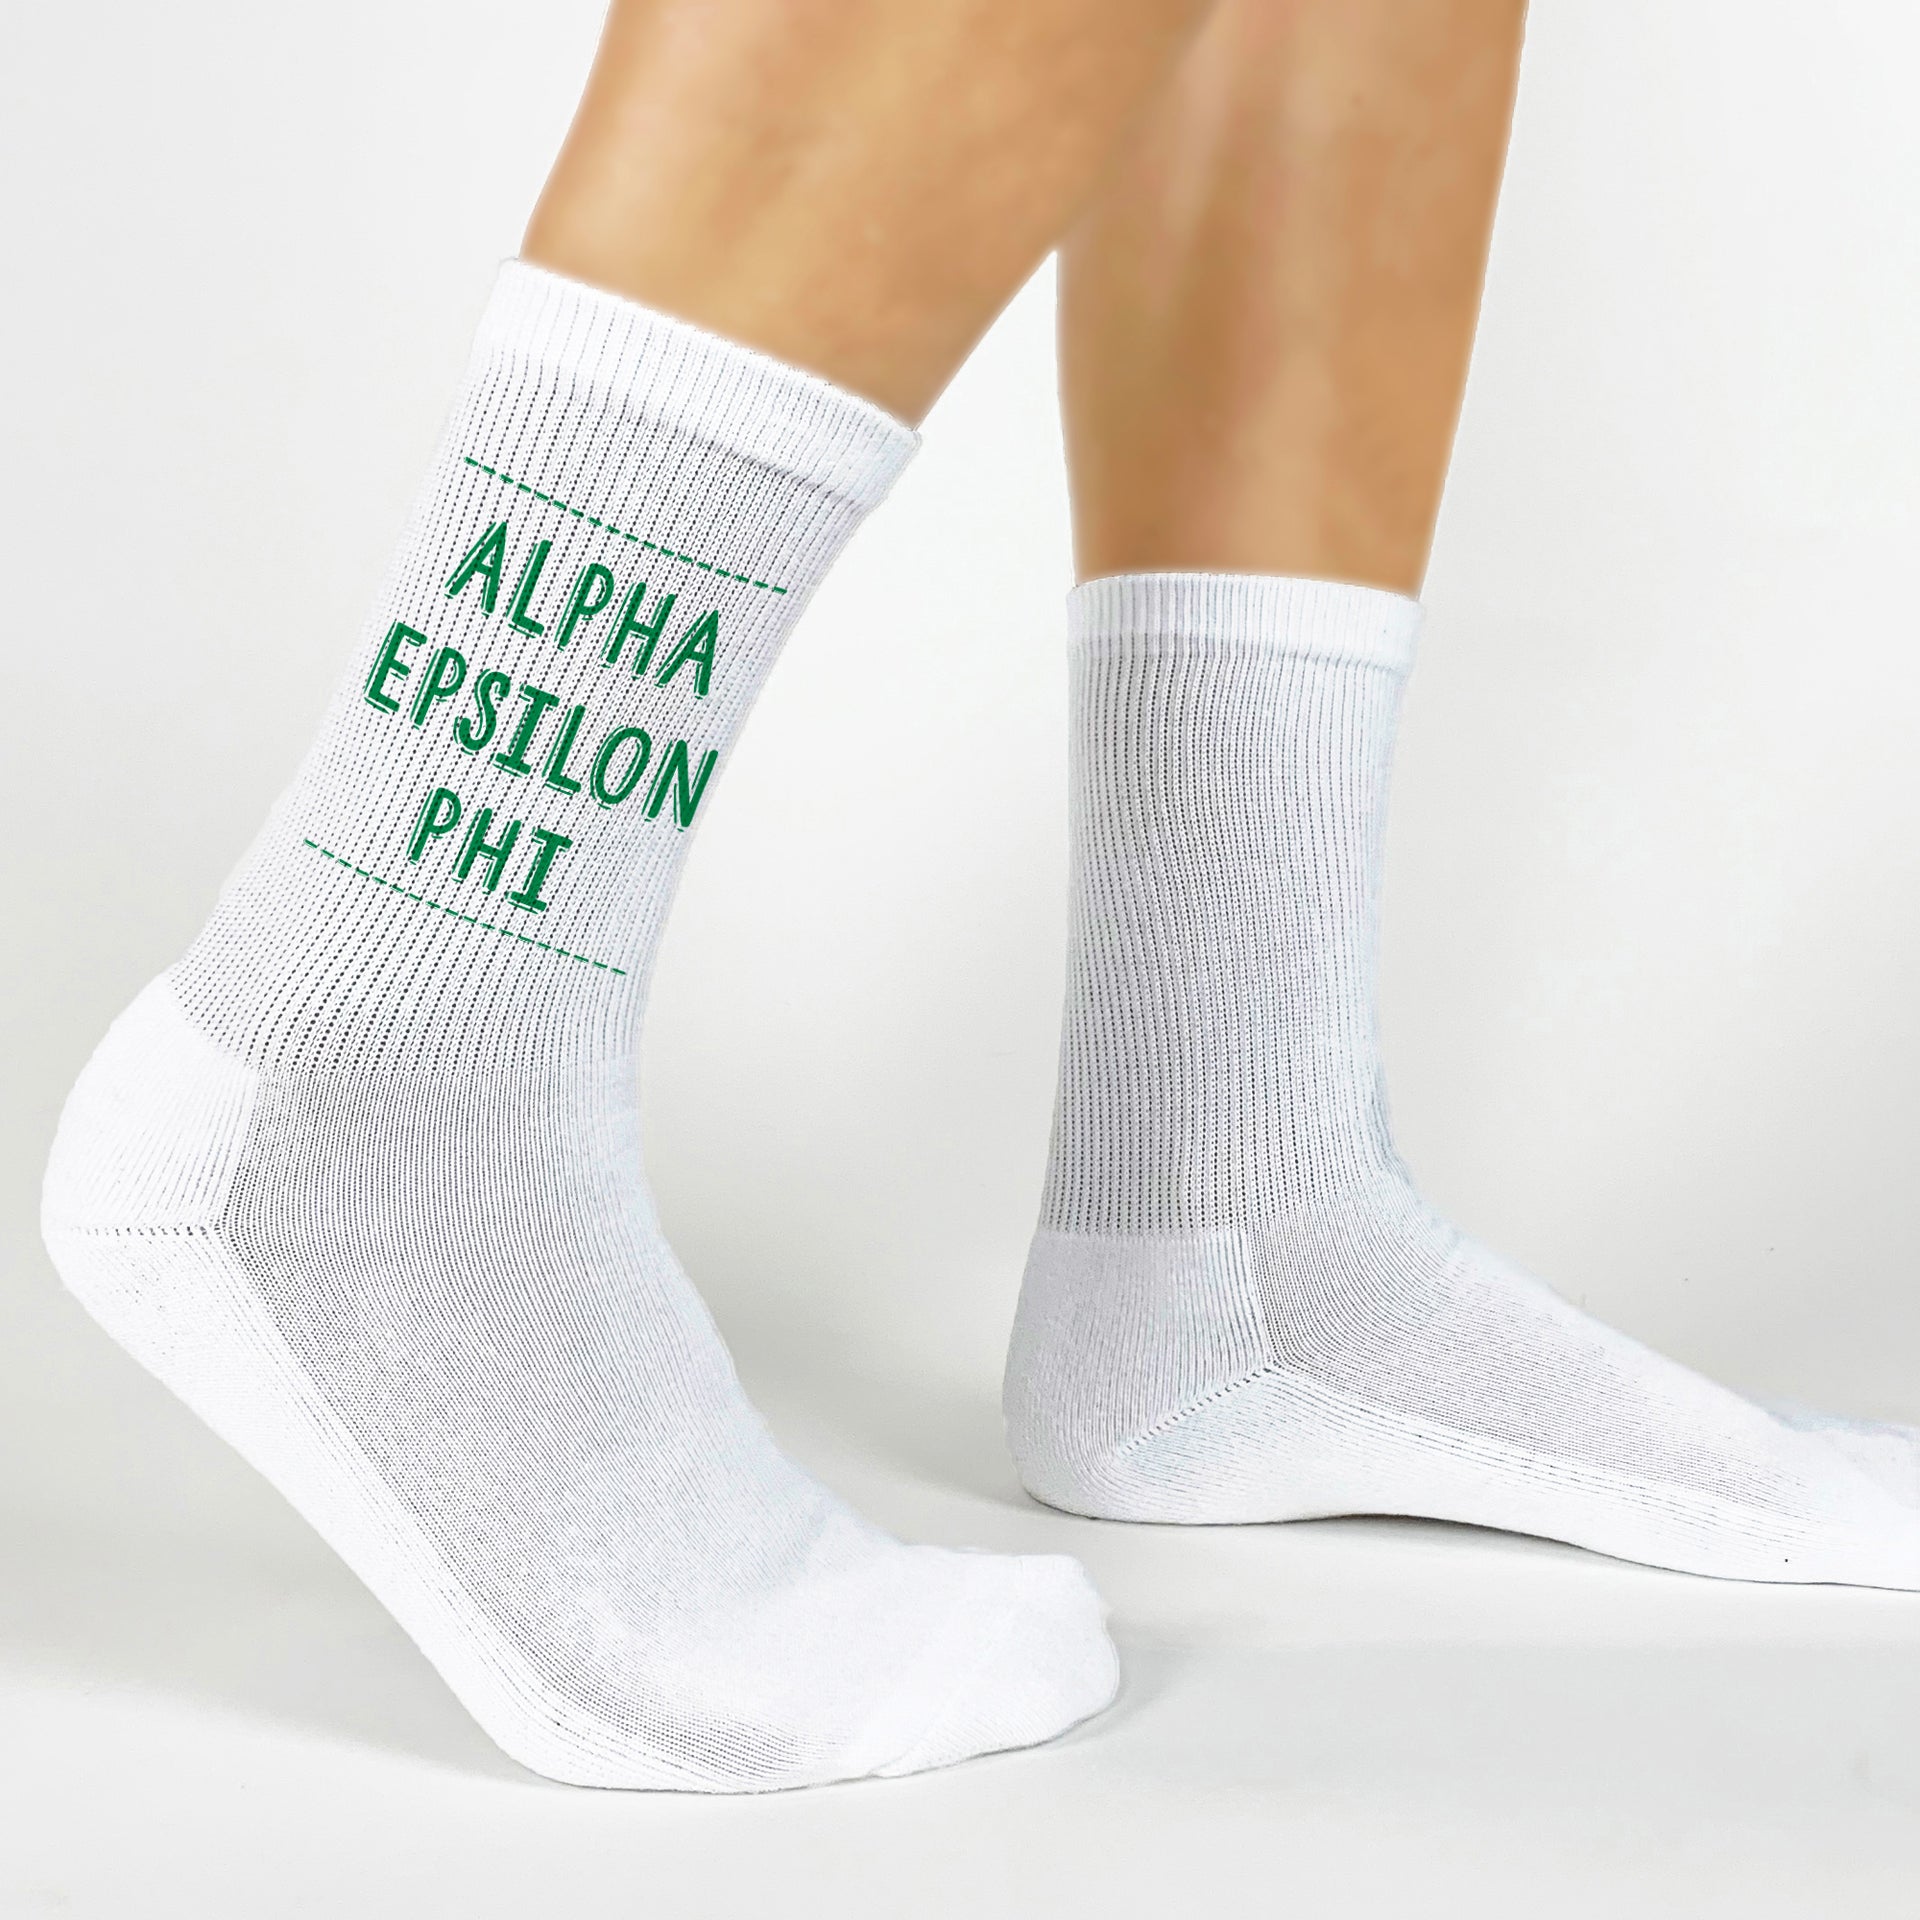 Alpha Epsilon Phi original sorority design by sockprints custom printed in AE Phi sorority colors on comfy white cotton crew socks. 